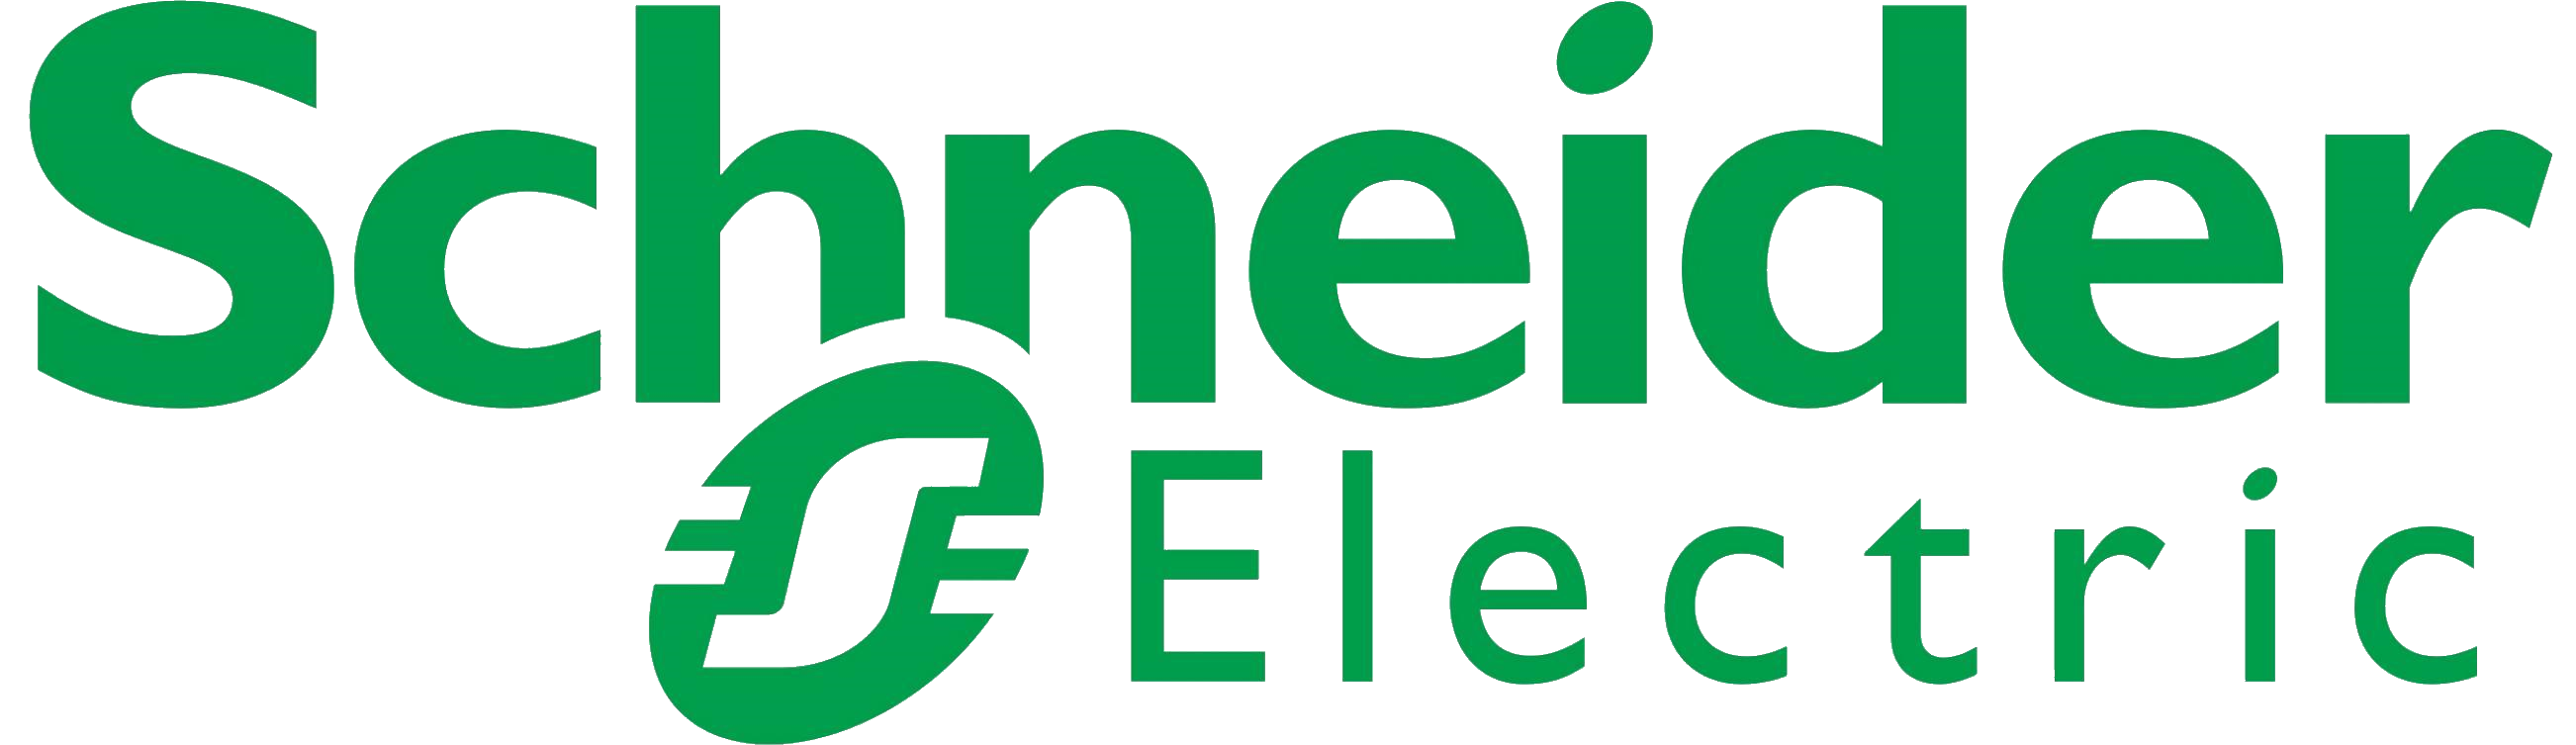 Schneider-Electric-logo-jpg-.png